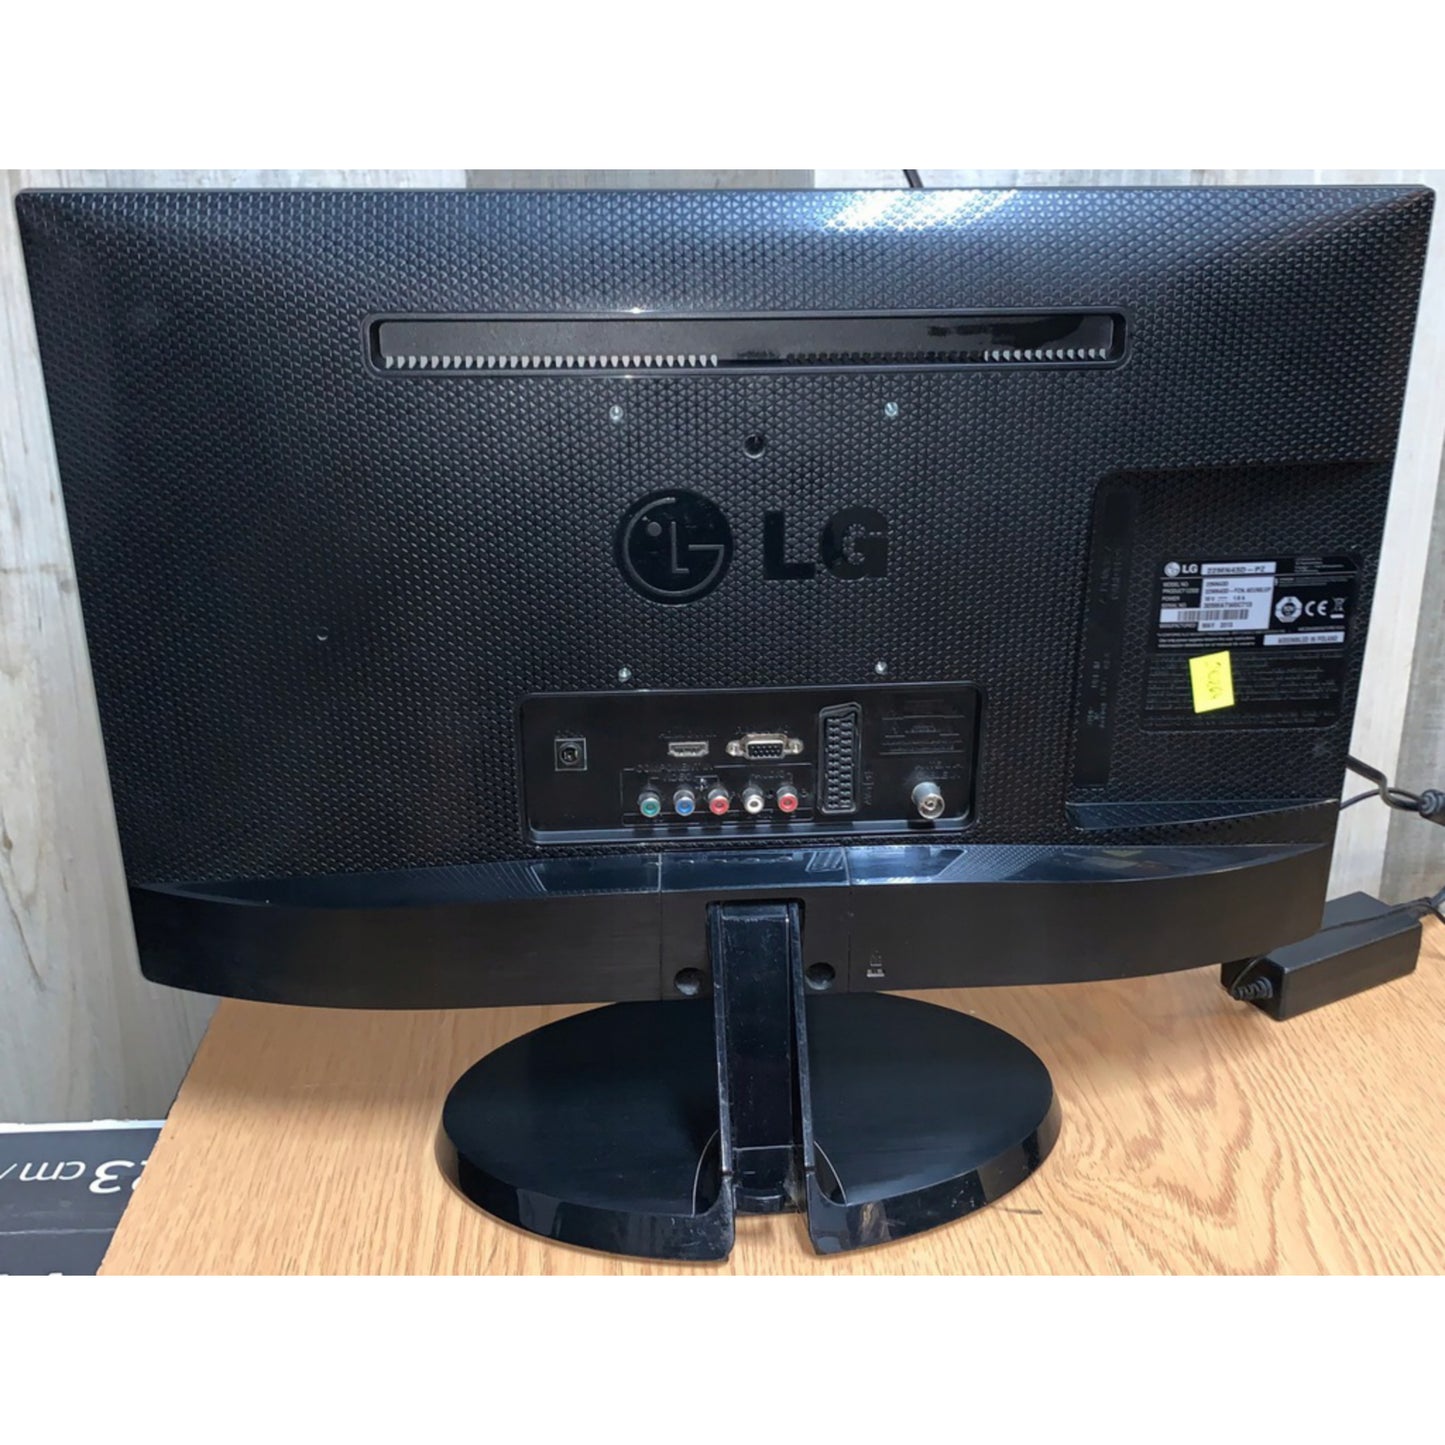 LG 24 Inch 24MN43D-PZ Full HD LED TV - Back View 